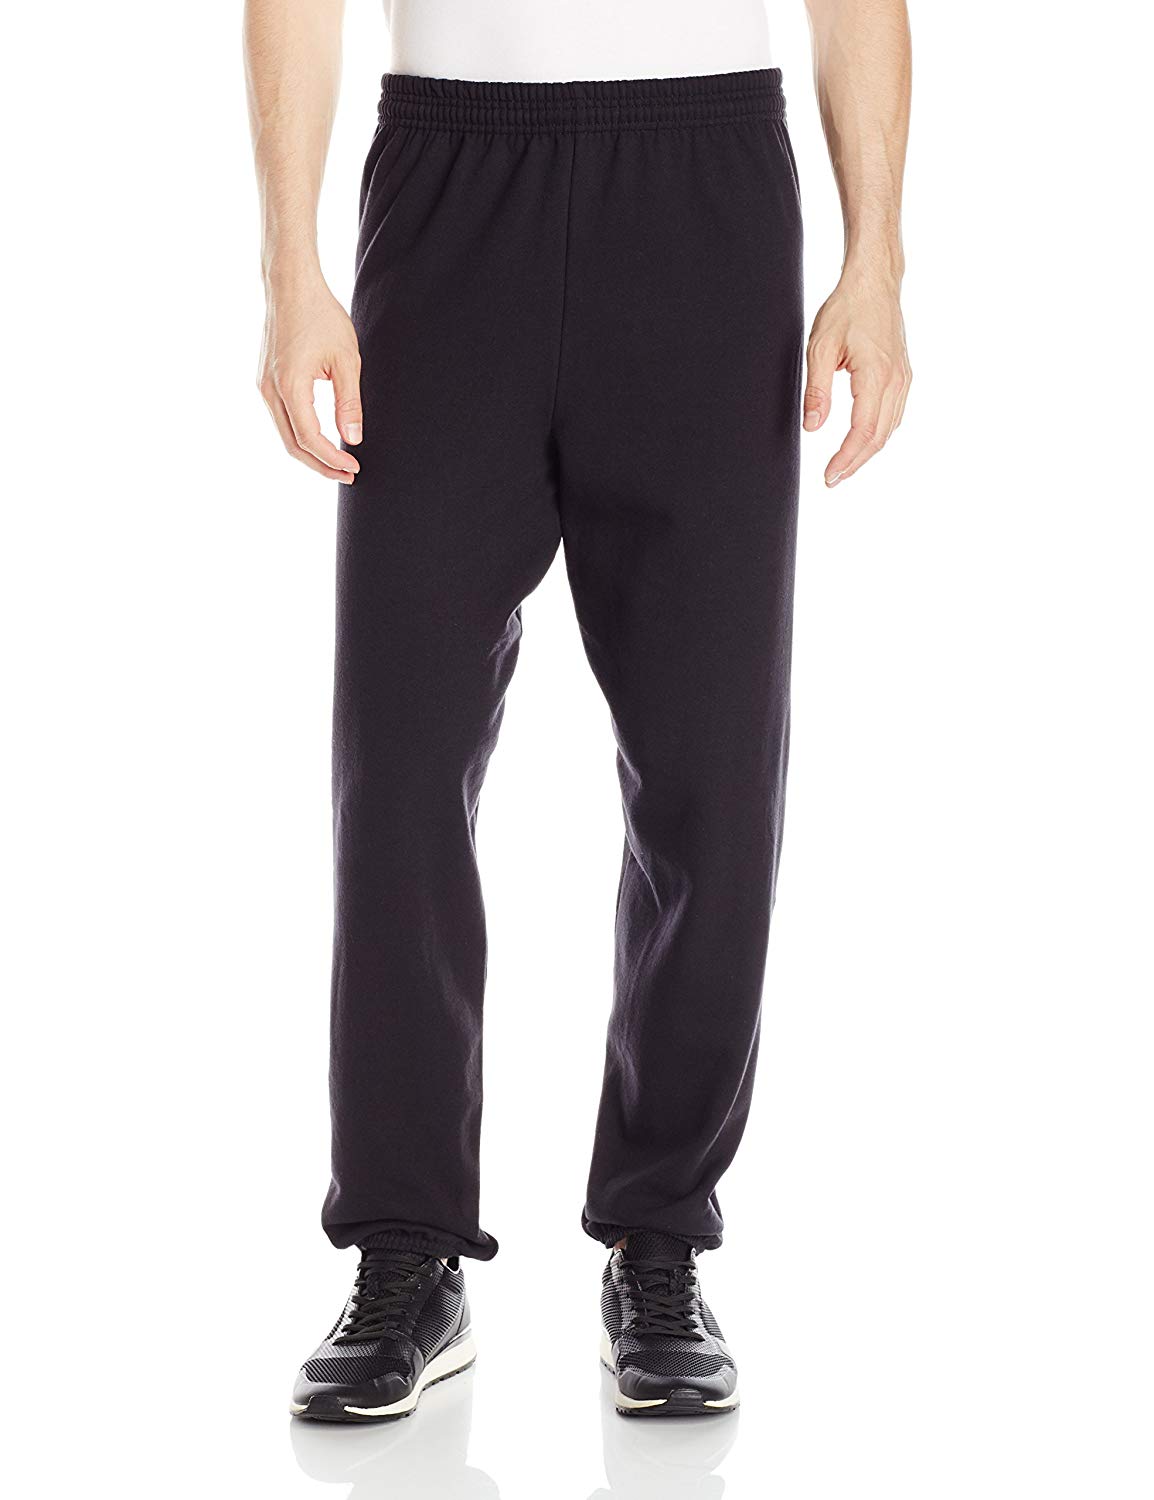 Hanes Men's EcoSmart Fleece Sweatpant, Black, M, Black, Size Medium ...